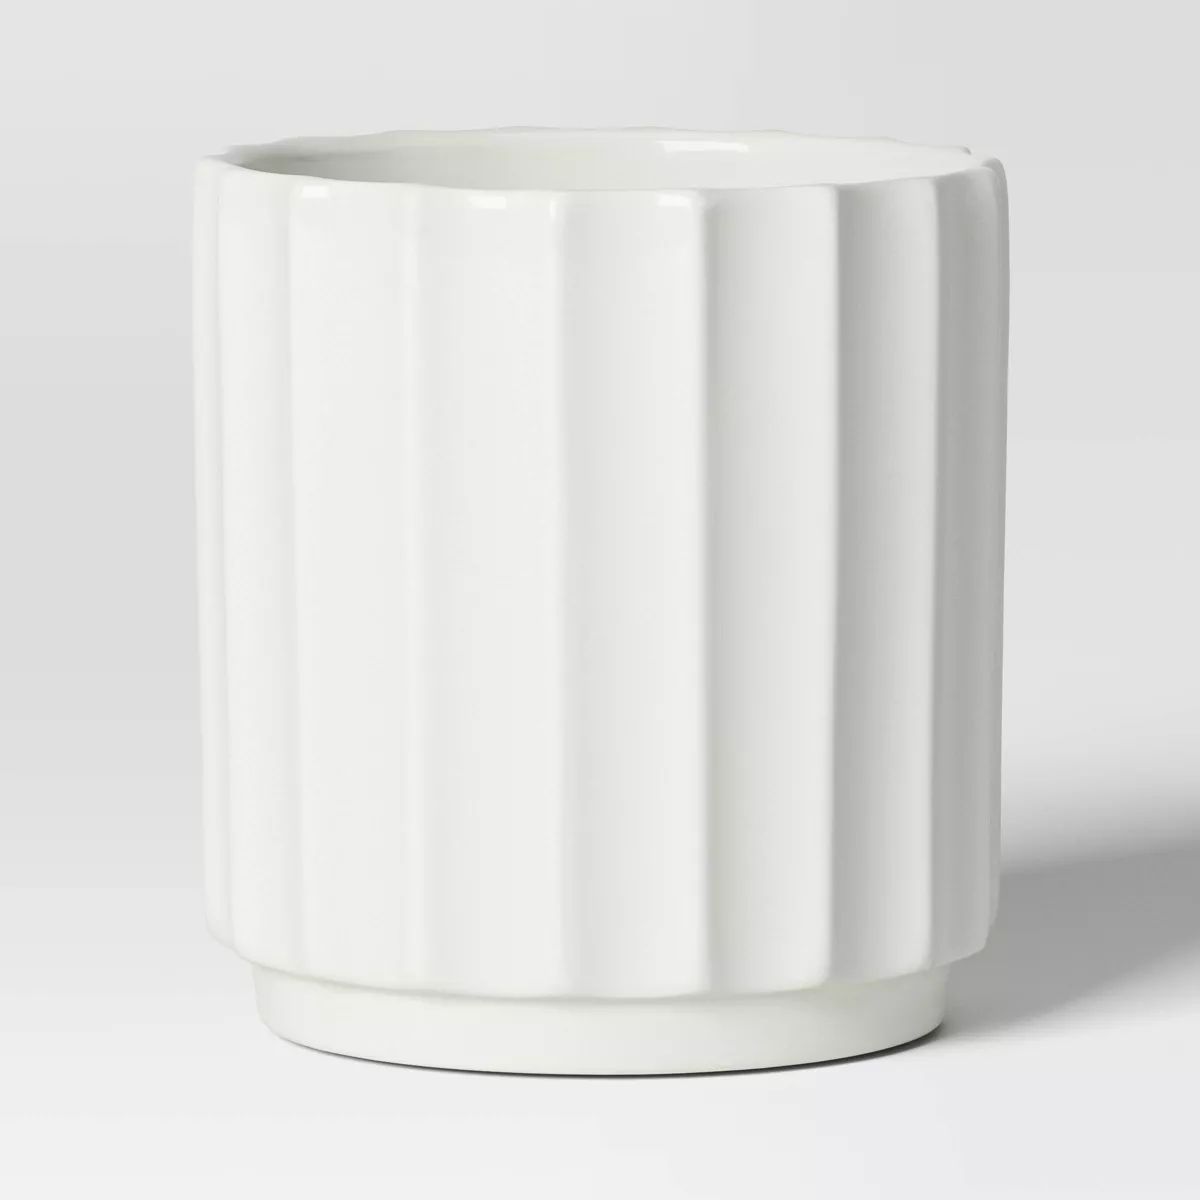 Geared Terracotta Indoor Outdoor Planter Pot White 8.11"x8.11" - Threshold™ | Target